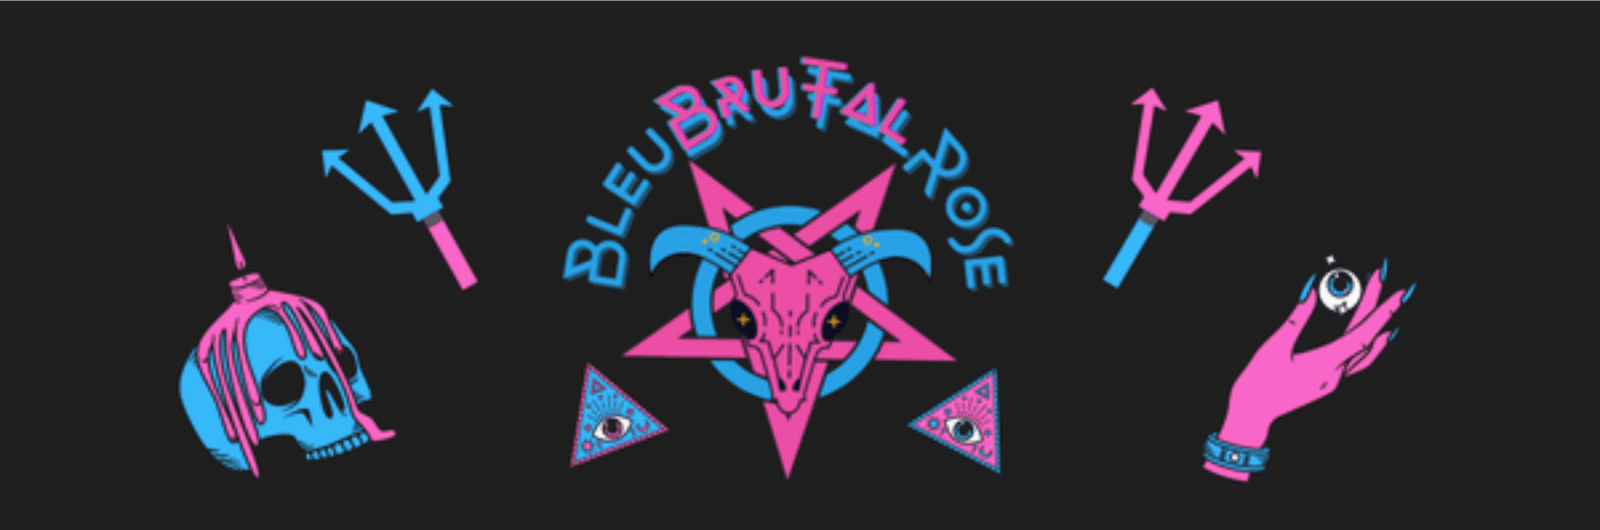 Cover photo of BleuBrutalRose